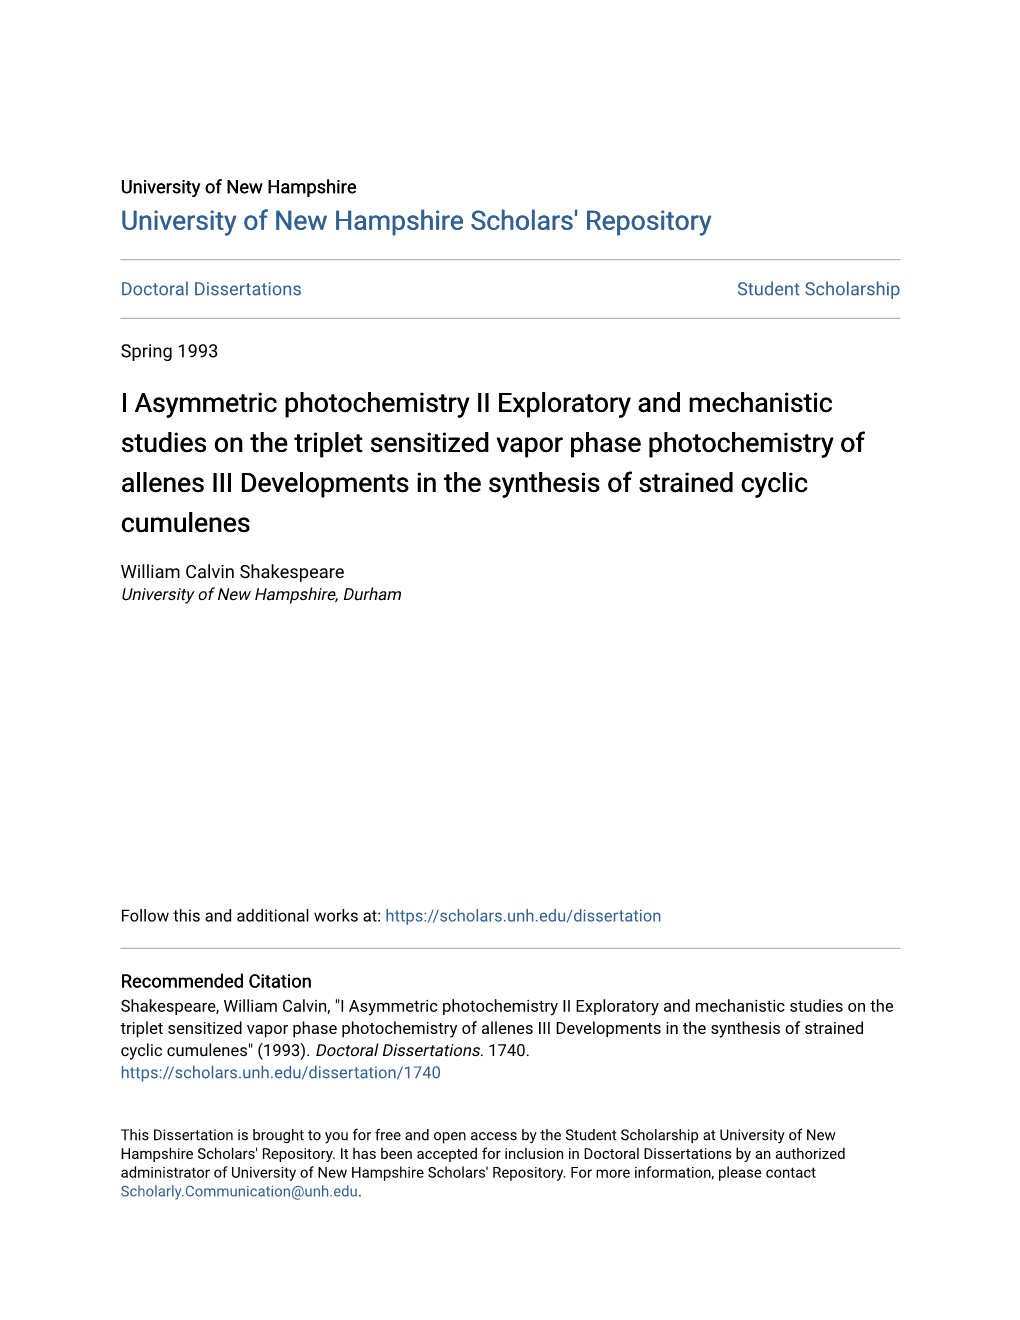 I Asymmetric Photochemistry II Exploratory and Mechanistic